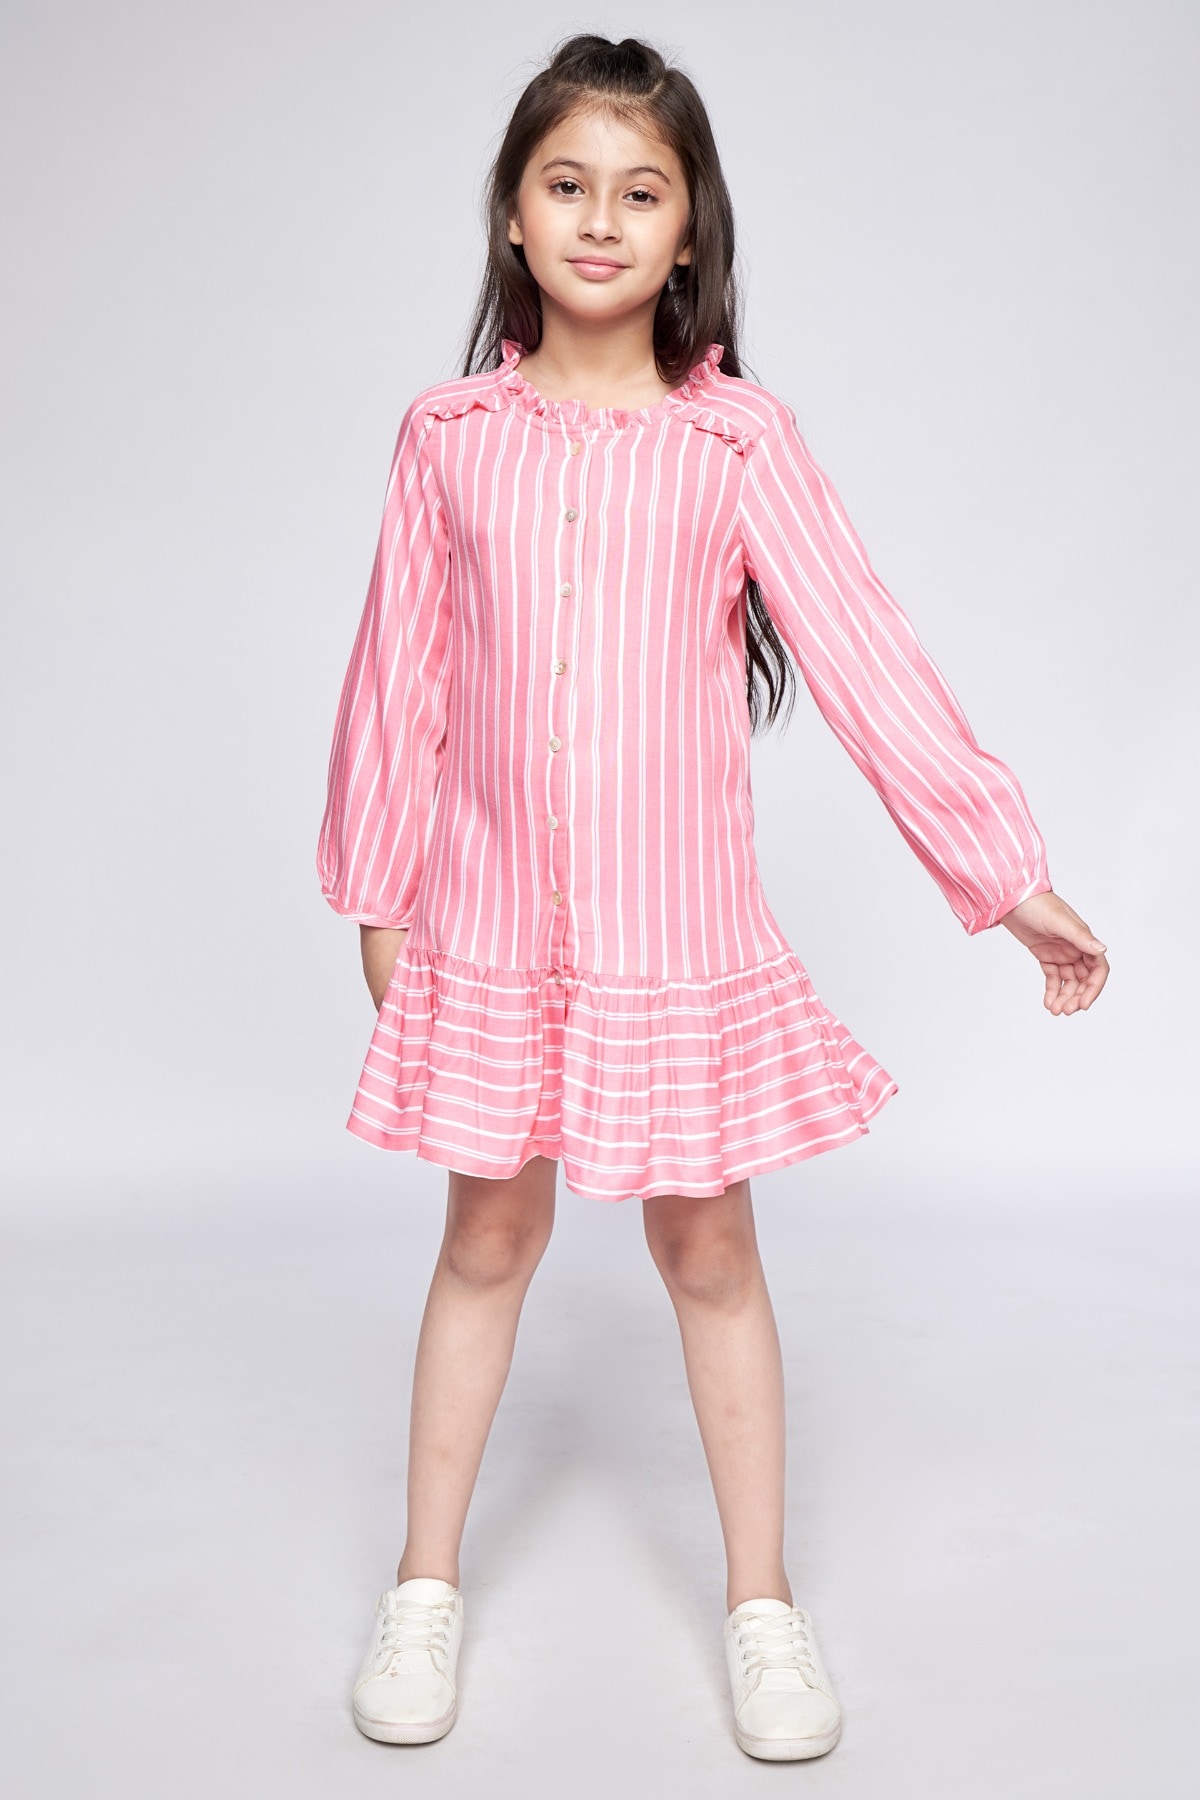 3 - Light Pink Stripes Flounce Dress, image 3